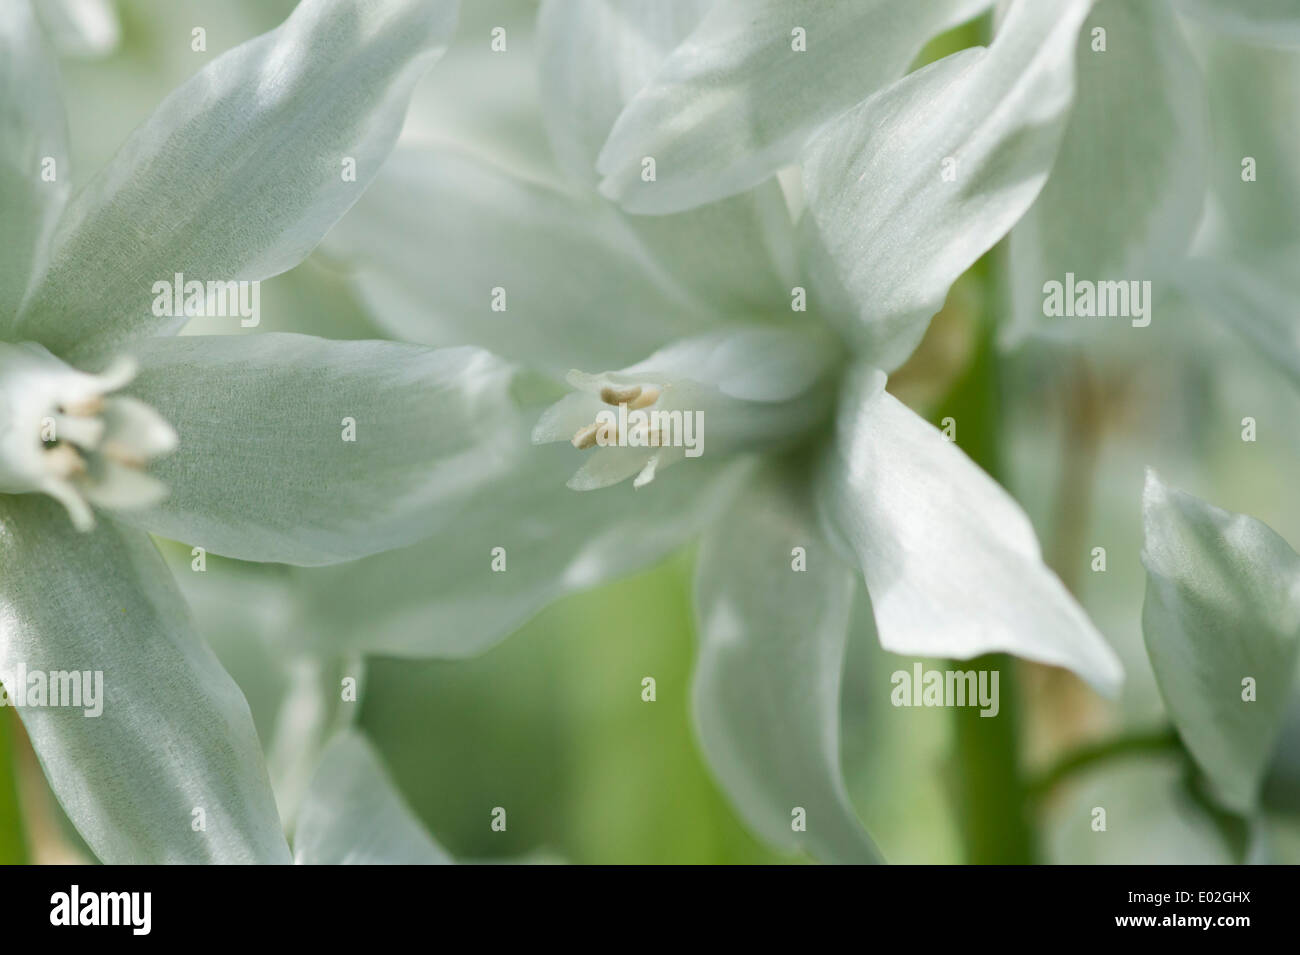 White Hyacinth flowers detail Stock Photo